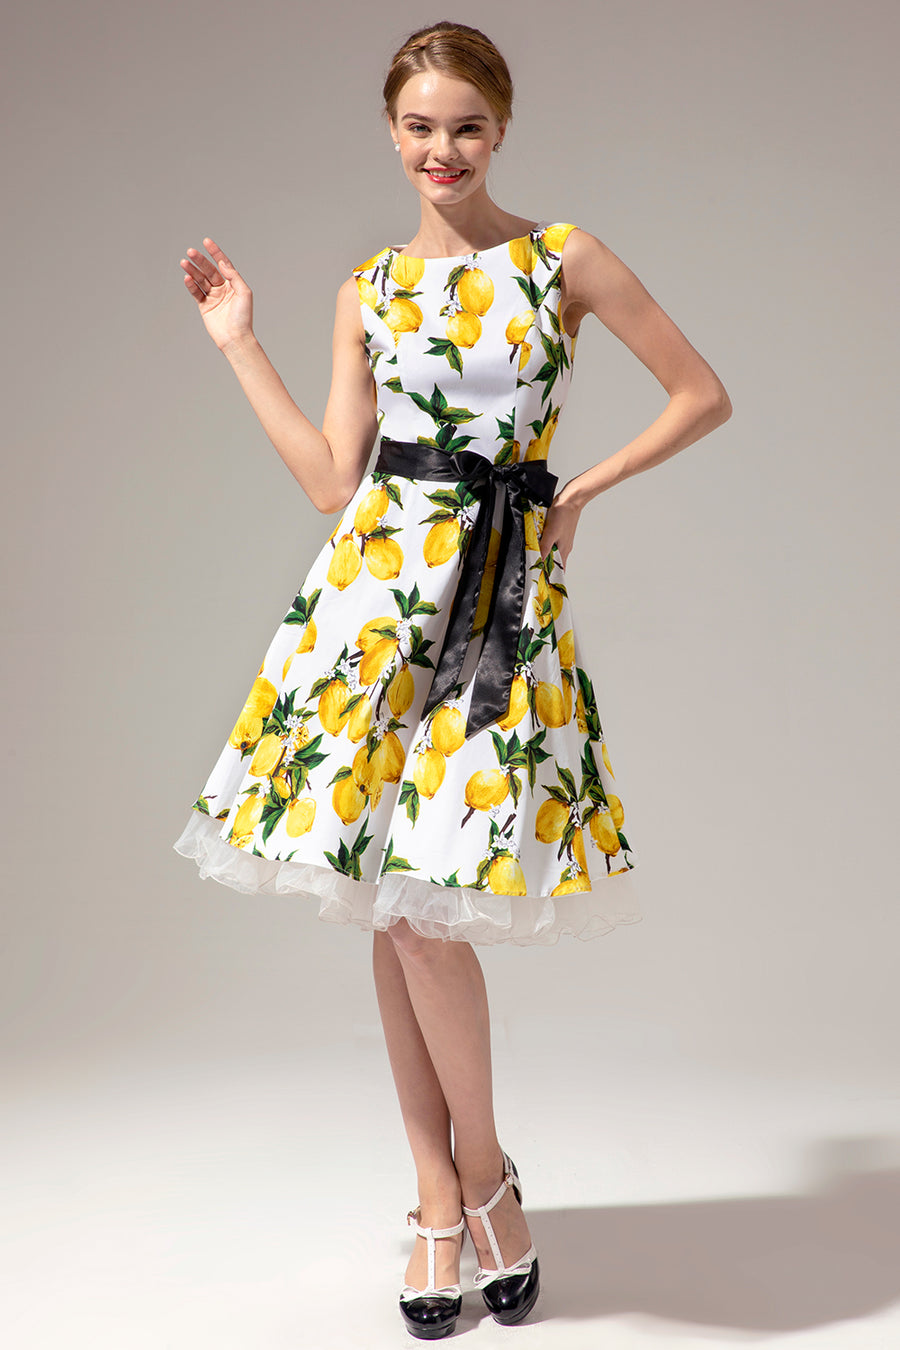 Vintage Dresses | Cheap Women's Retro & Vintage-Inspired Dresses Online ...